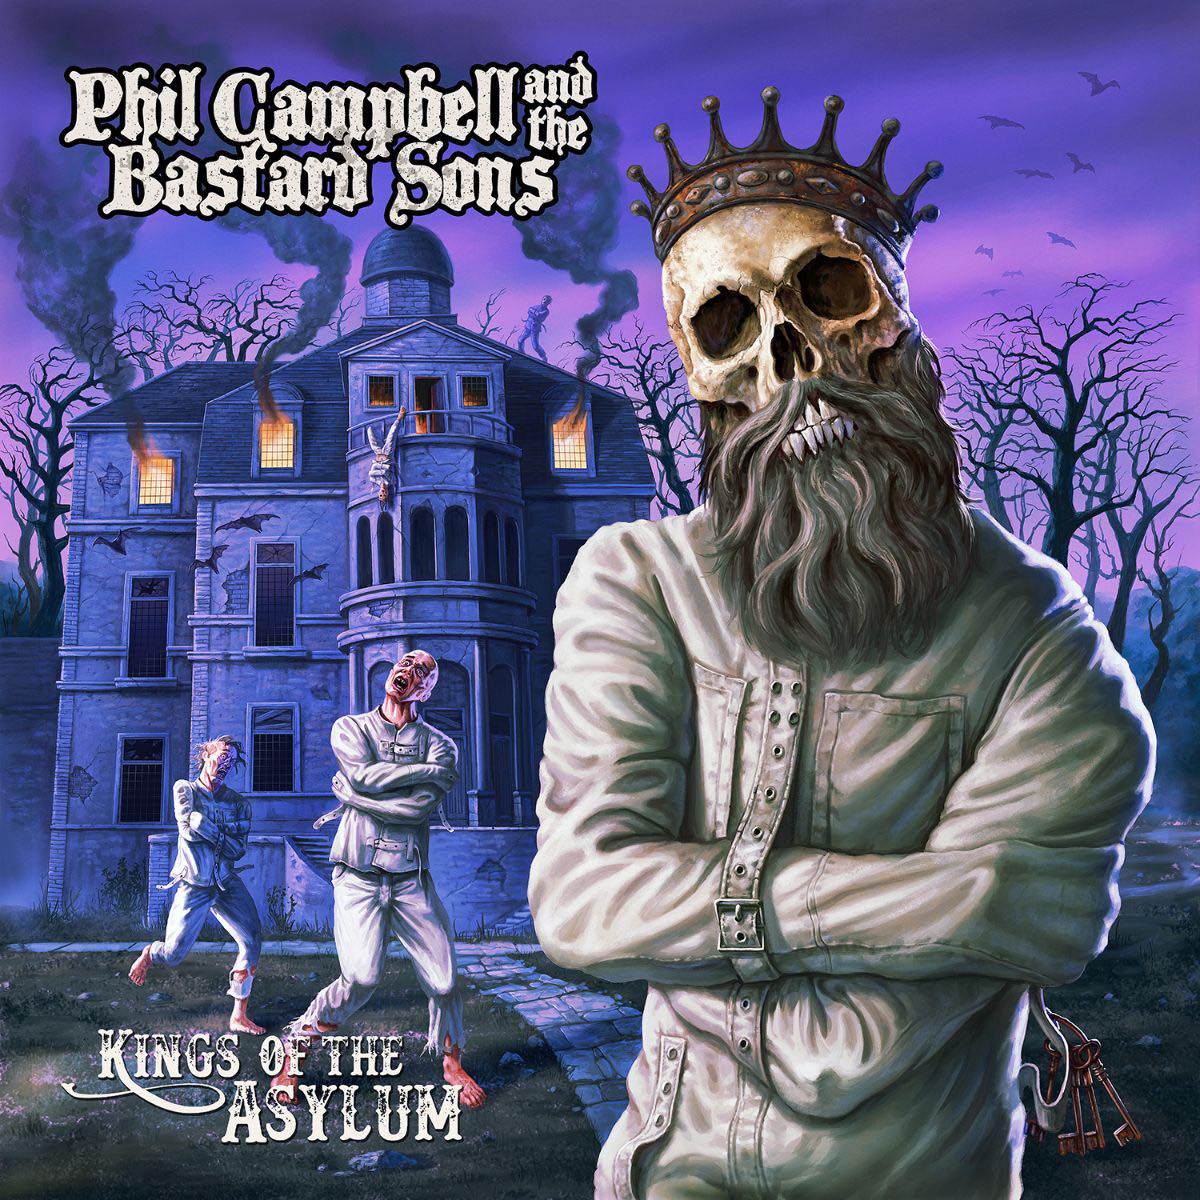 Portada de Kings of the Asylum de Phil Campbell and the Bastard Sons